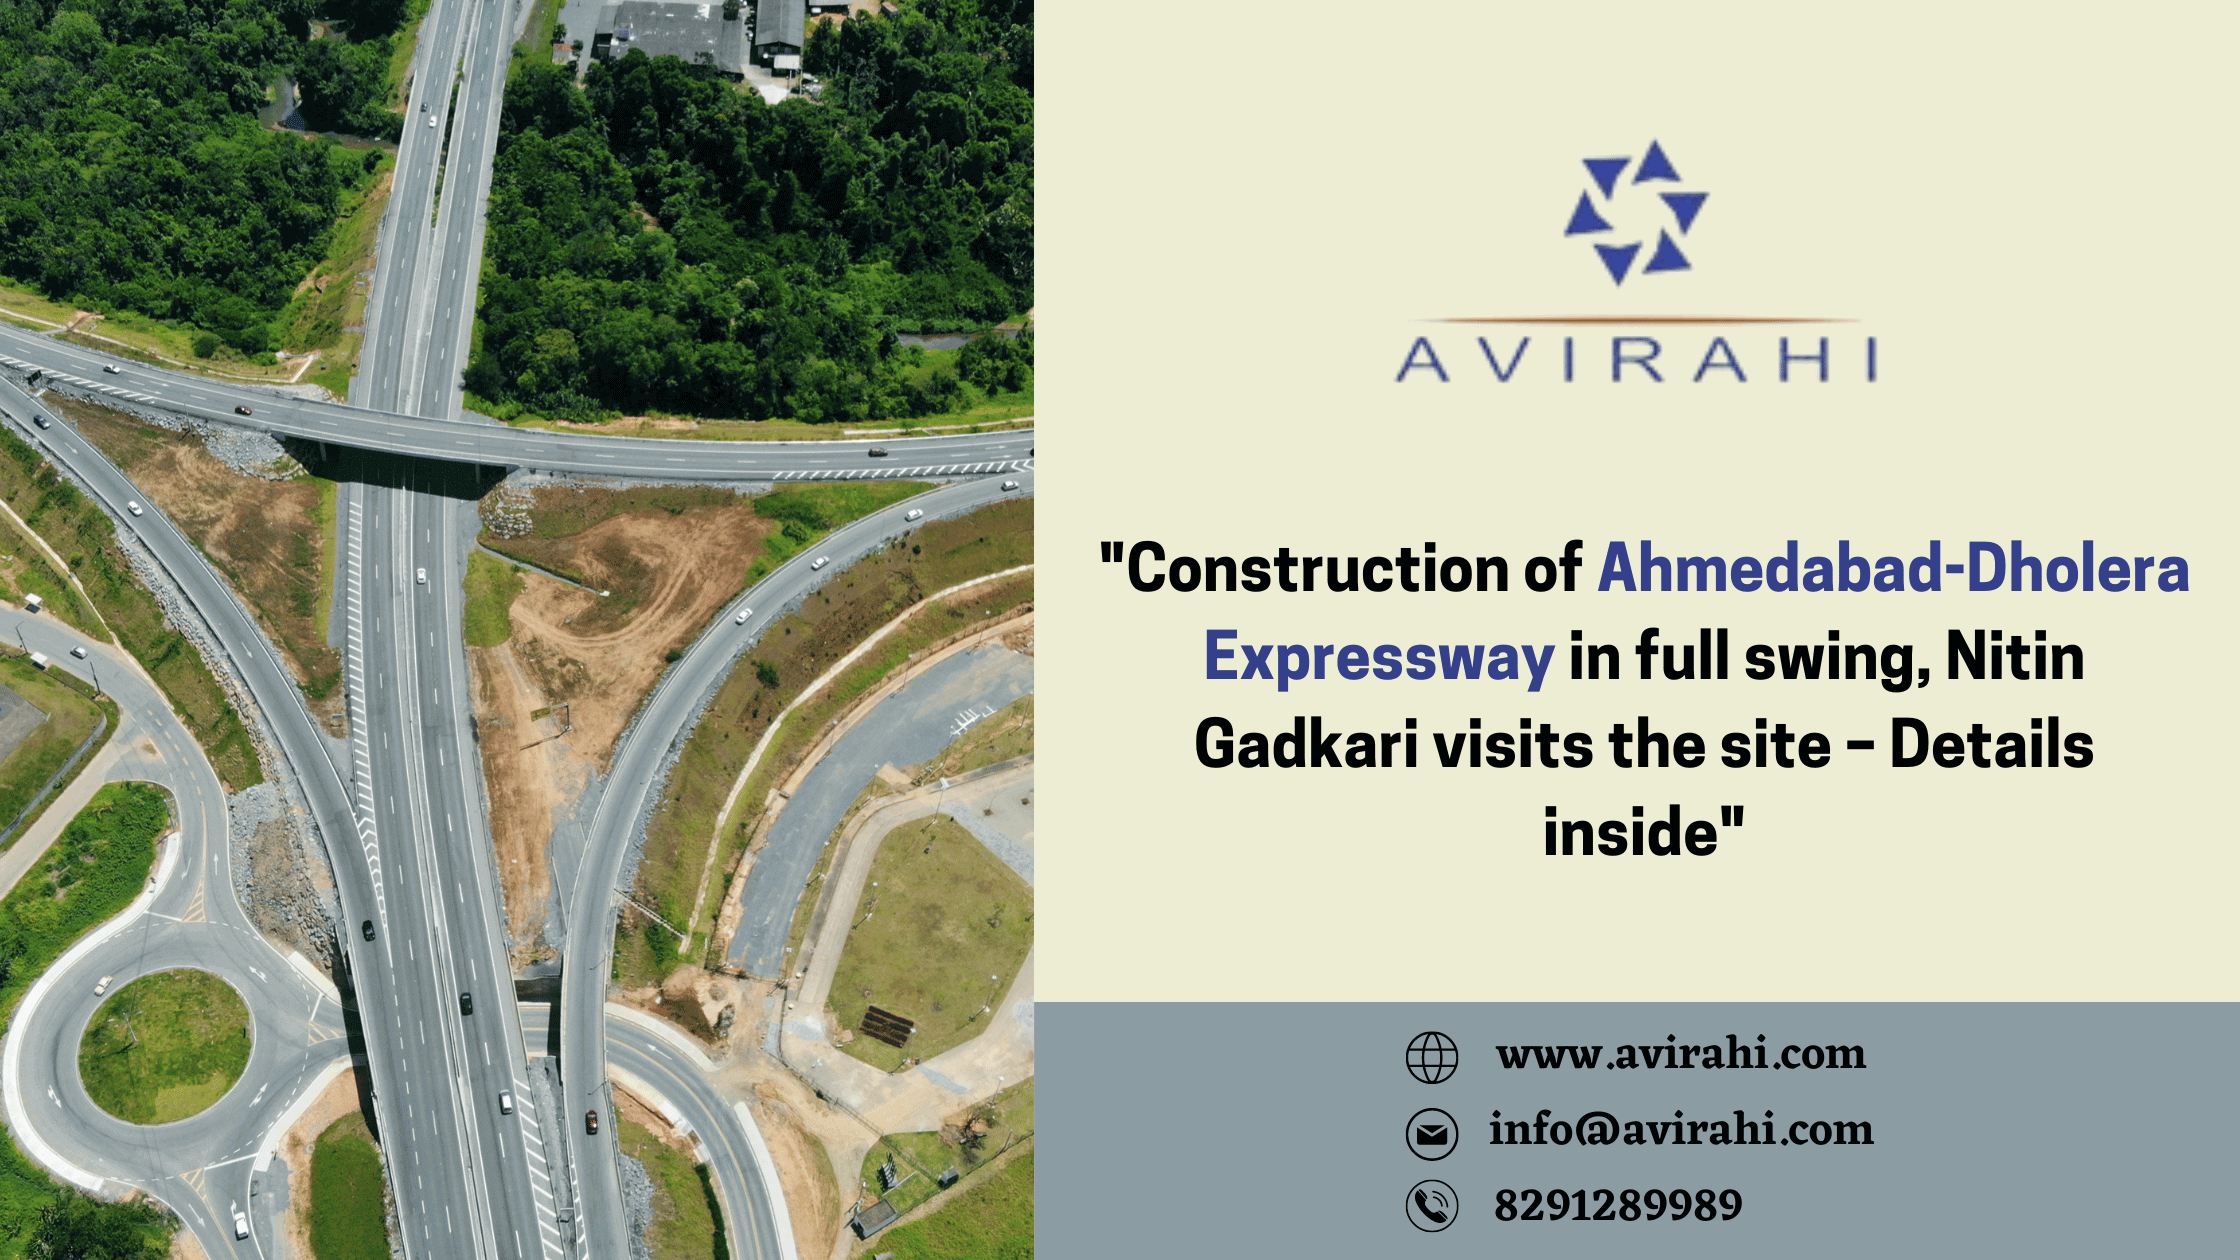 Construction of Ahmedabad-Dholera Expressway in full swing, Nitin Gadkari visits the site – Details inside